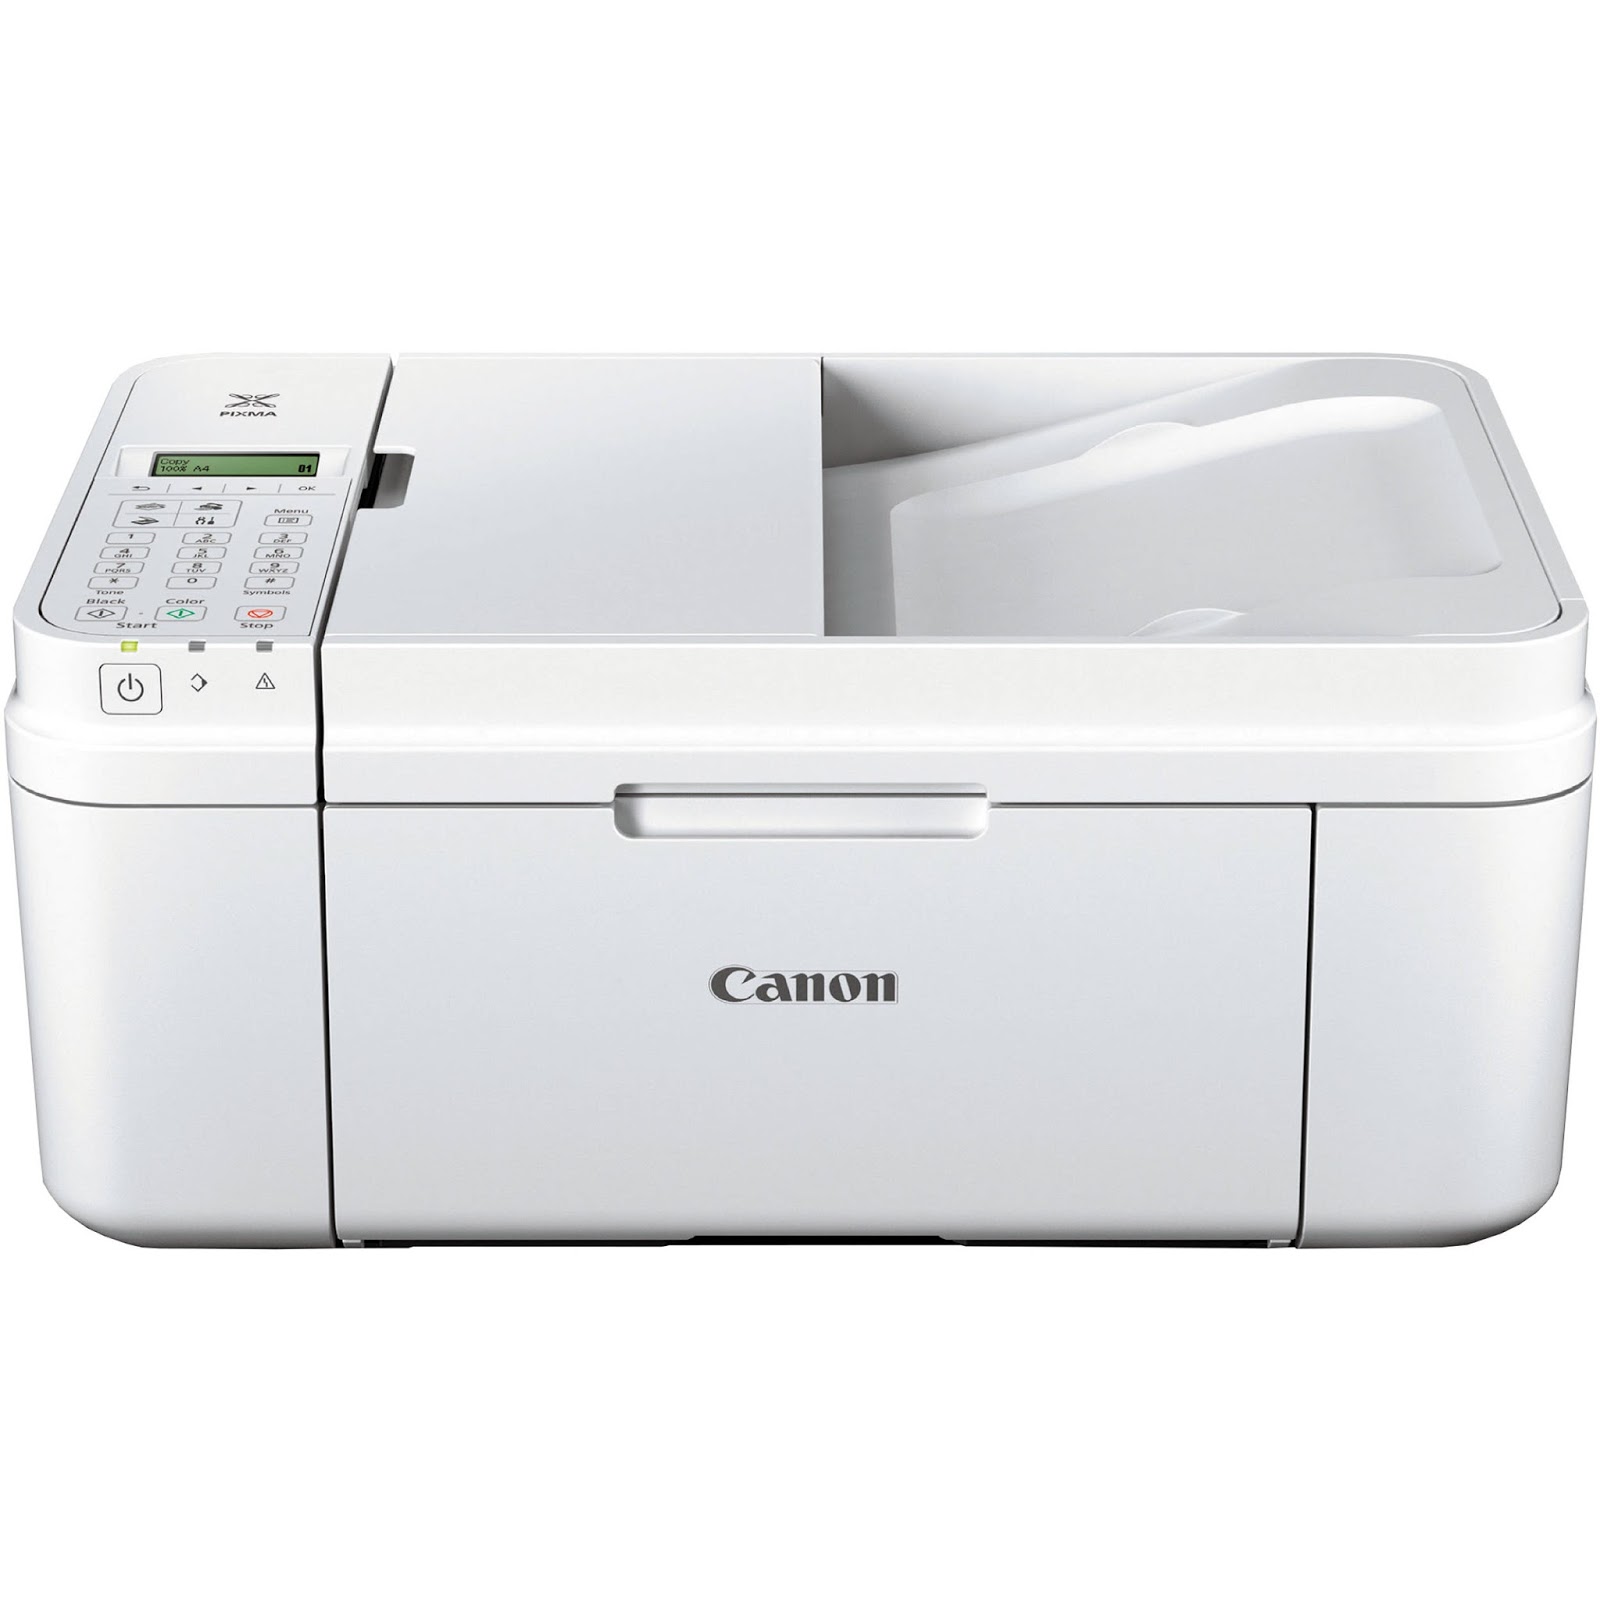 Canon Printer Drivers Free Download Mac